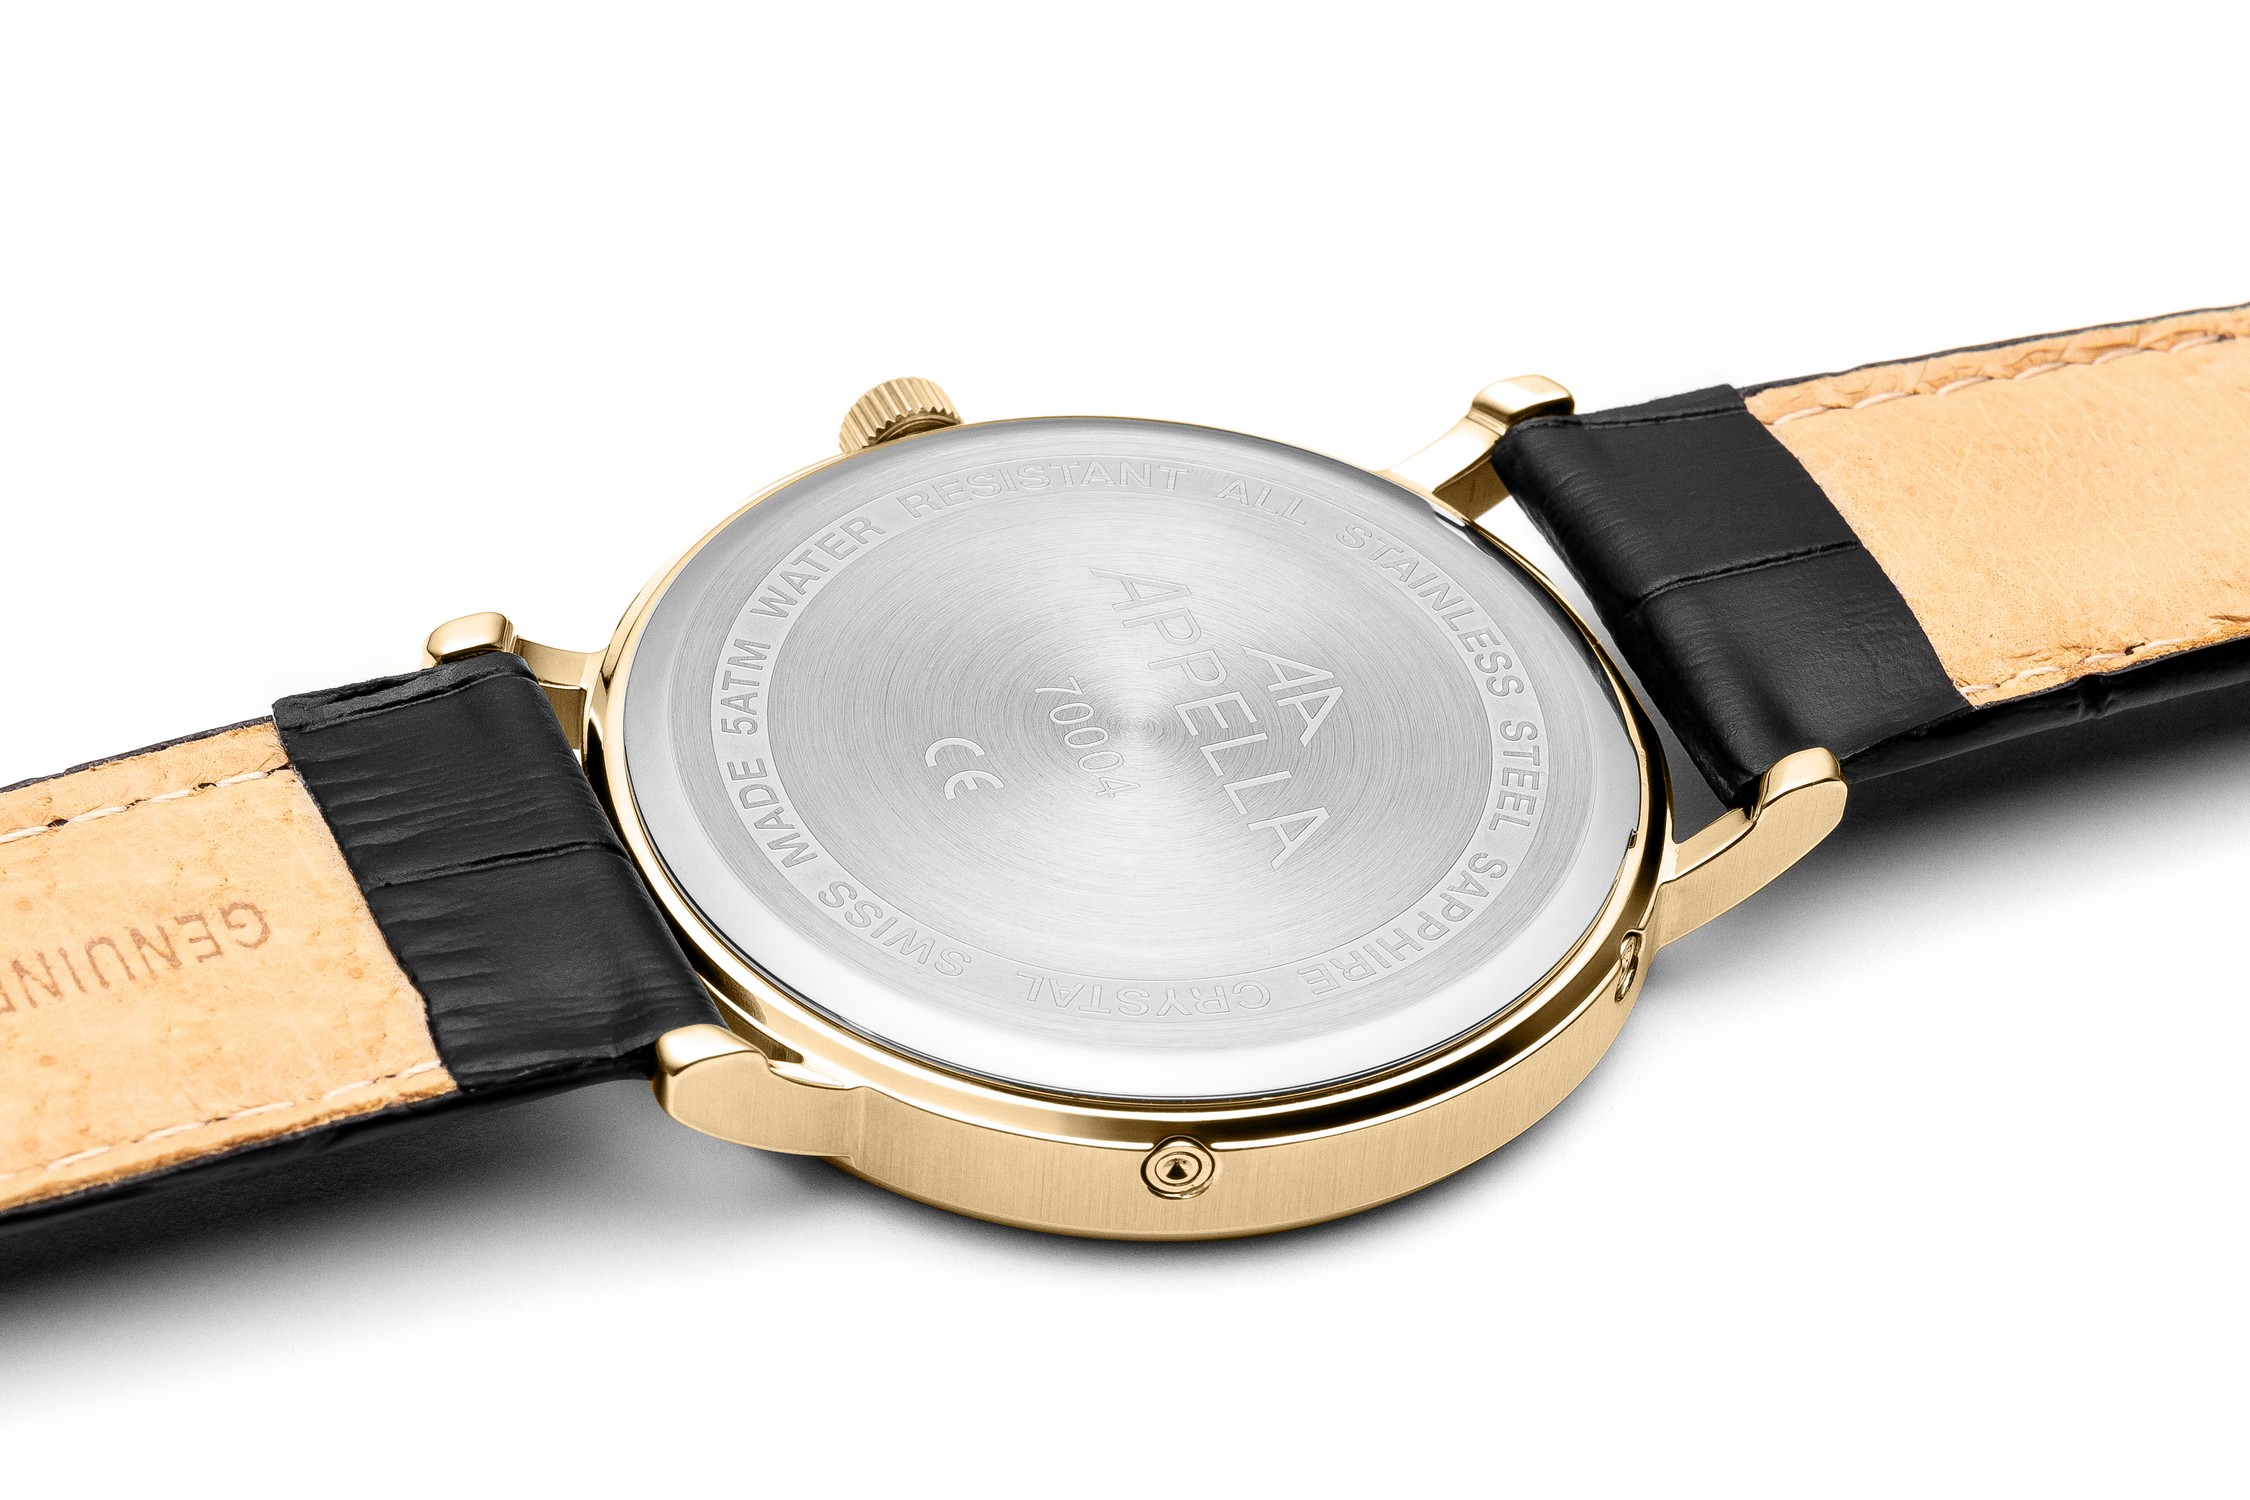 APPELLA  Мужские швейцарские часы, кварцевый механизм с фазами Луны, сталь с покрытием, 43 мм